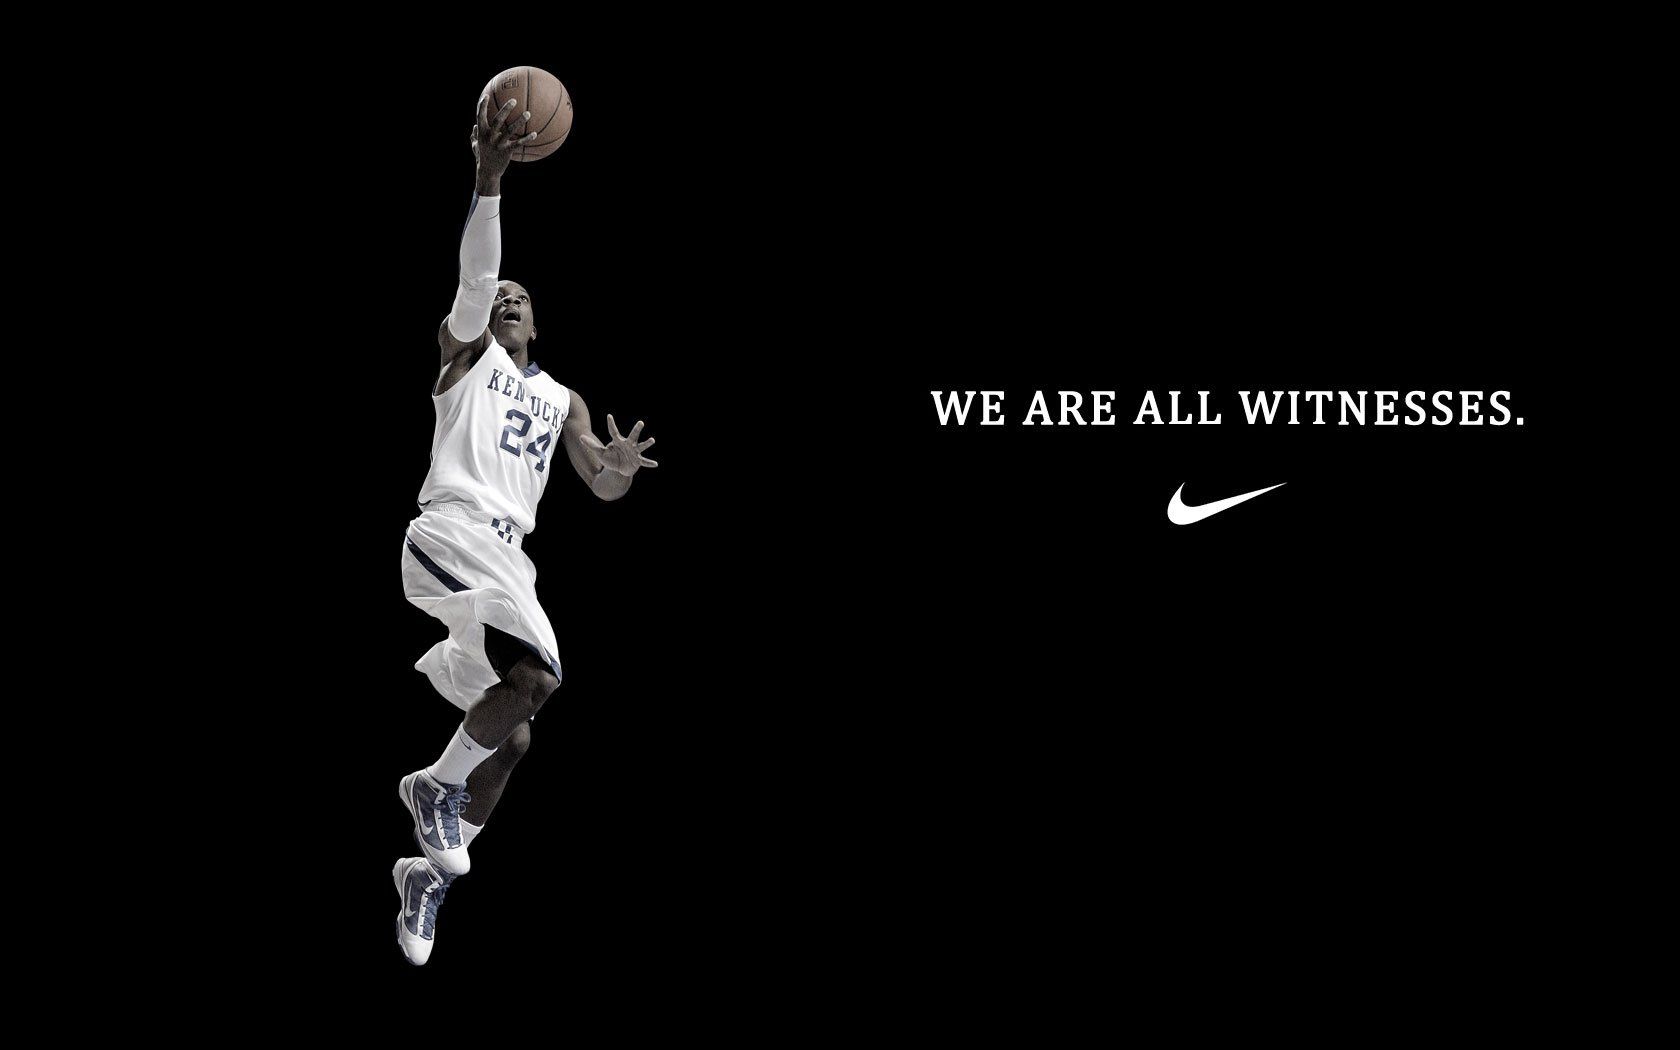 Nike Basketball Wallpapers 2015 - Wallpaper Cave